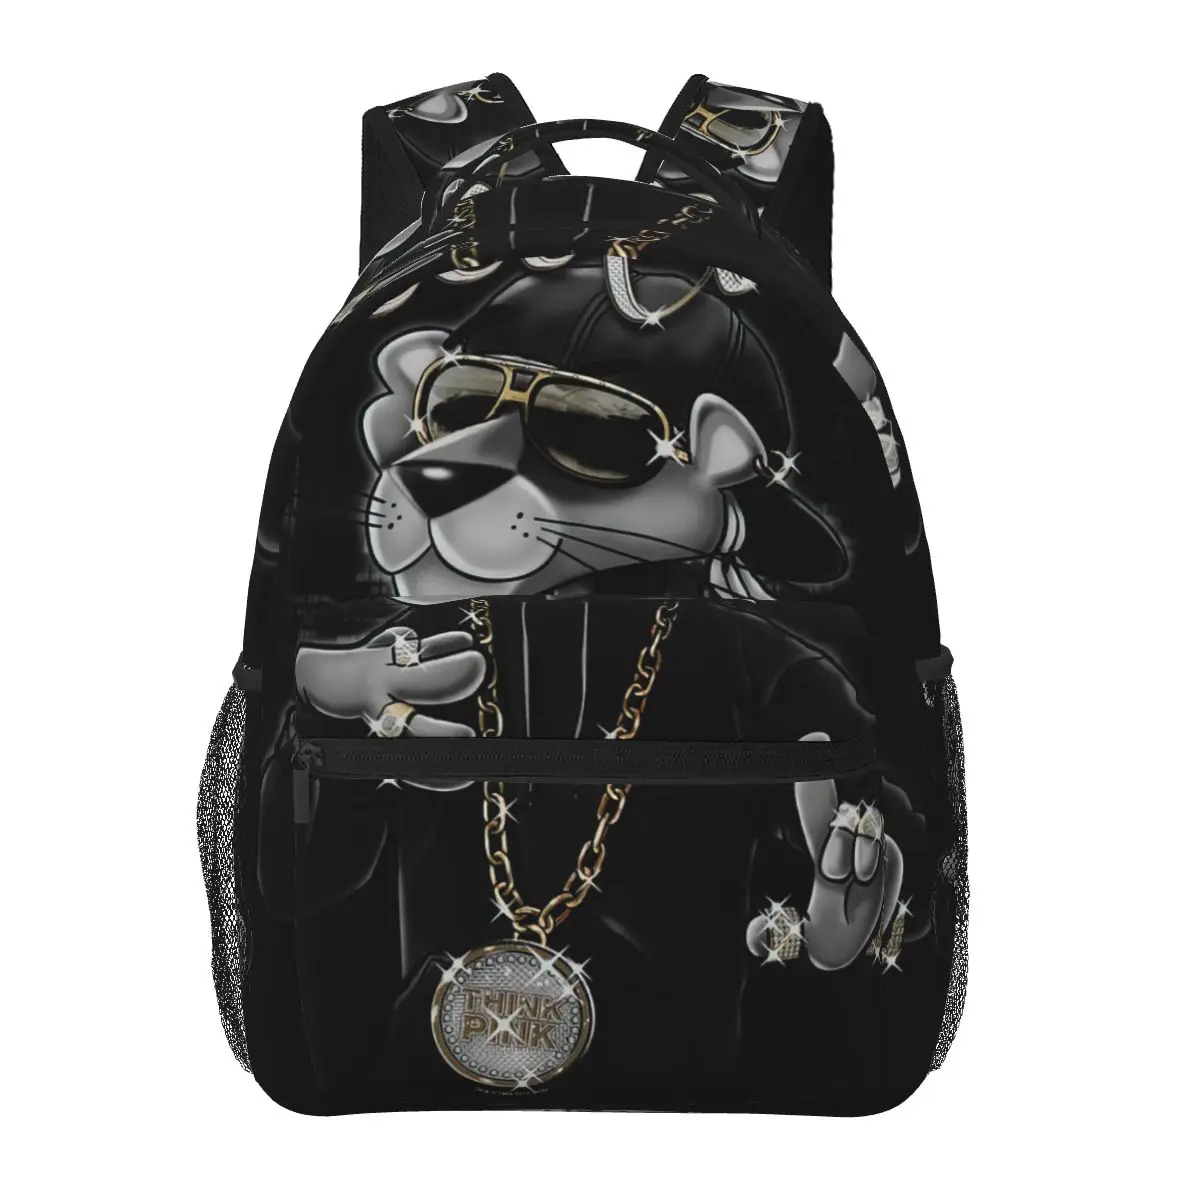 

Pink Panther Backpack for Girls Boys Travel RucksackBackpacks for Teenage school bag